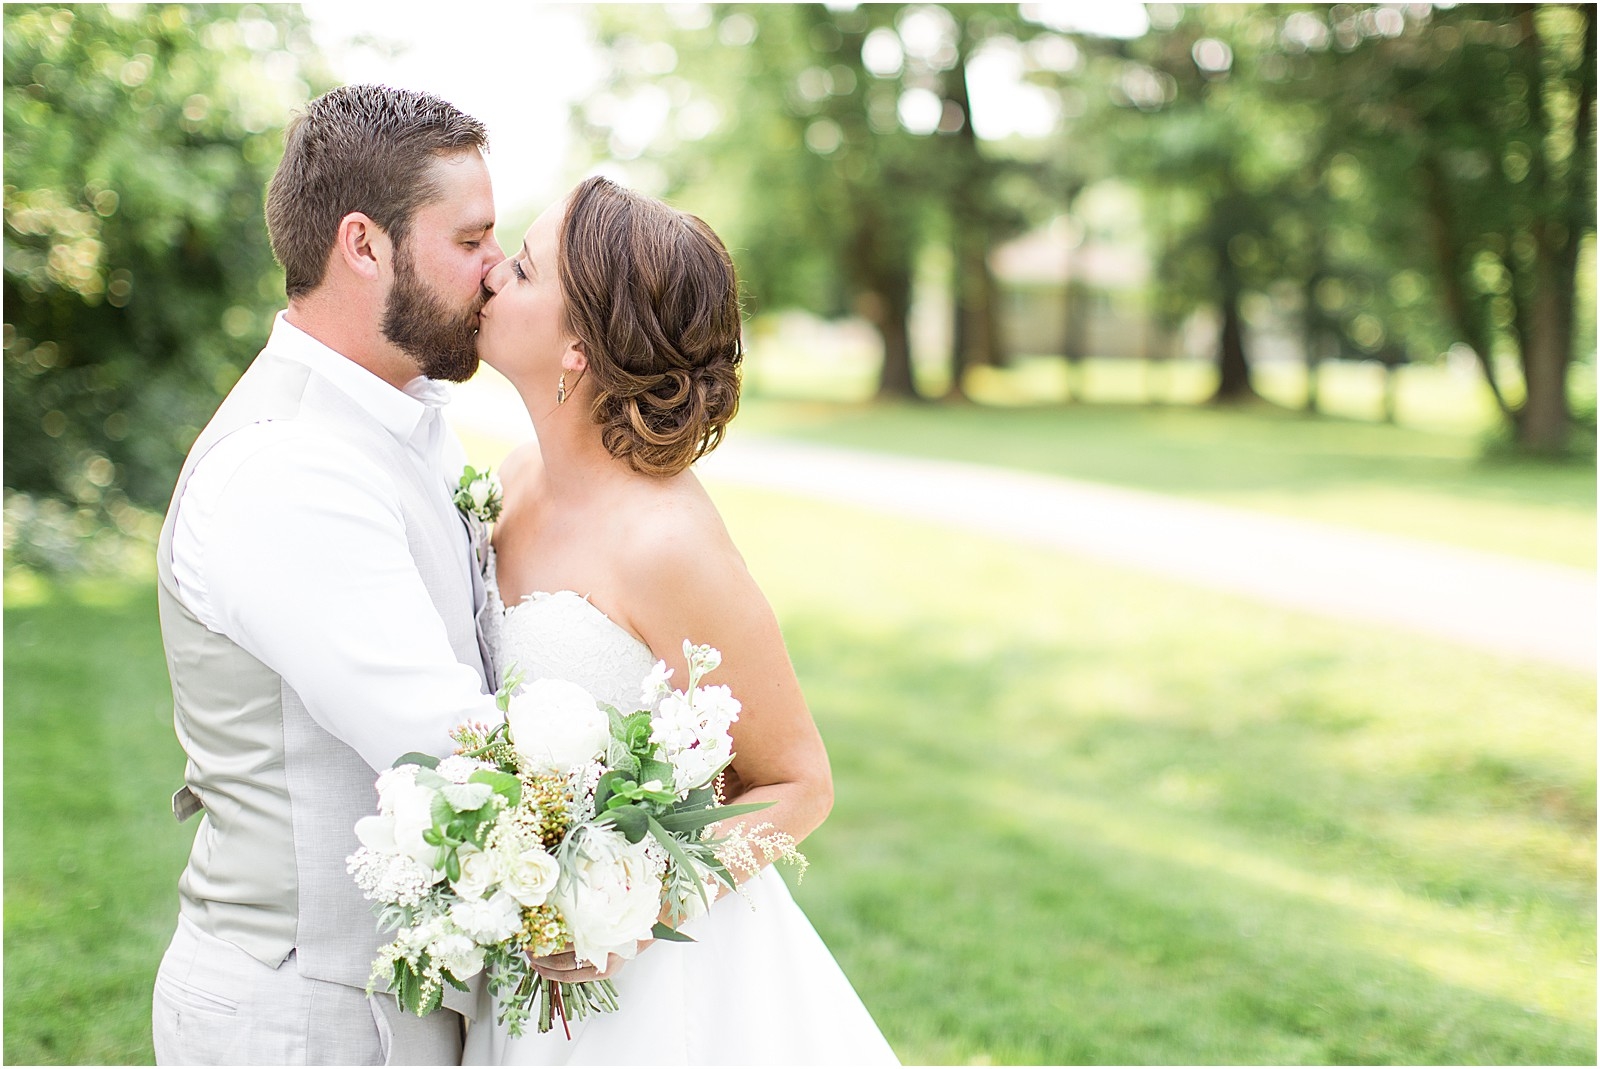 A Evansville Indiana Backyard Wedding | Bailey and Ben 058.jpg